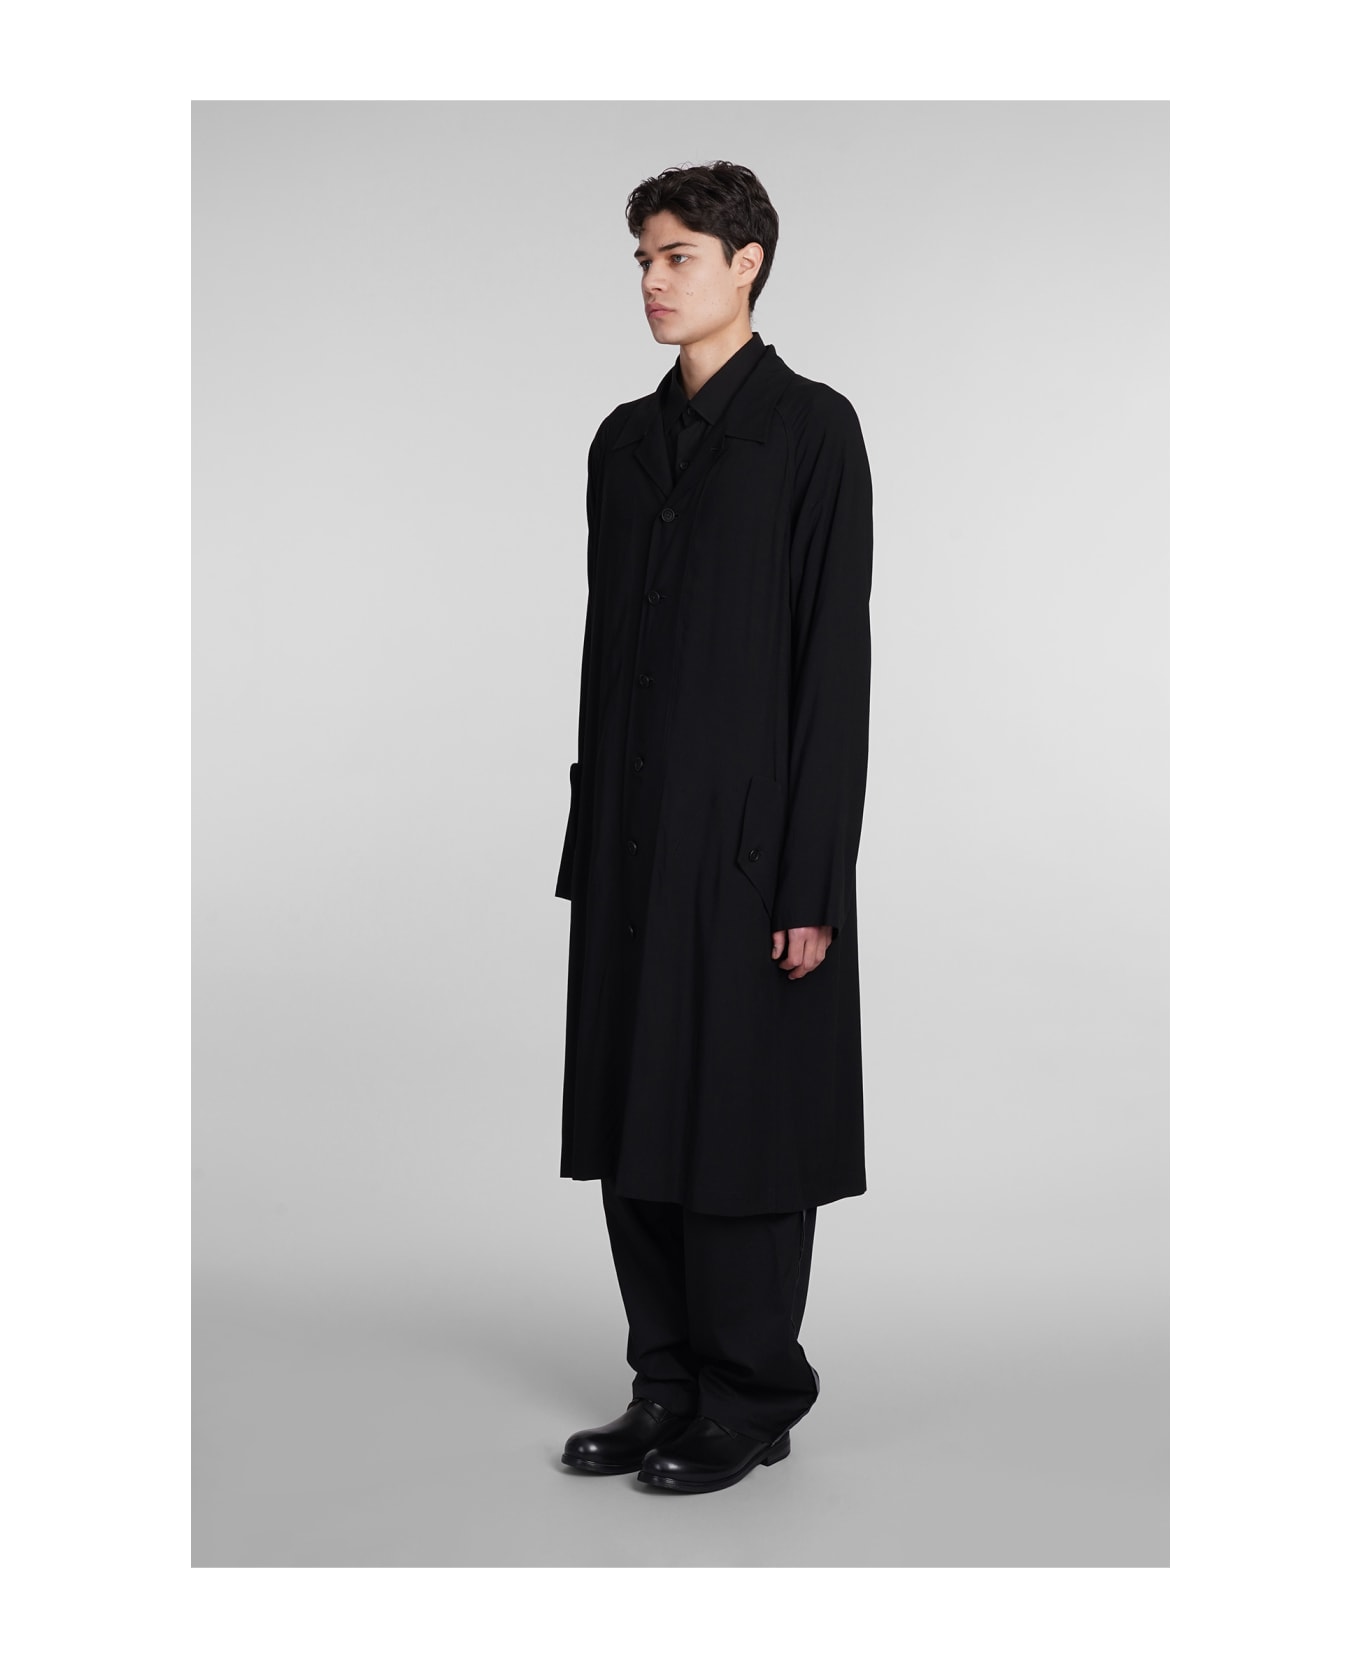 Yohji Yamamoto Outerwear In Black Rayon - black